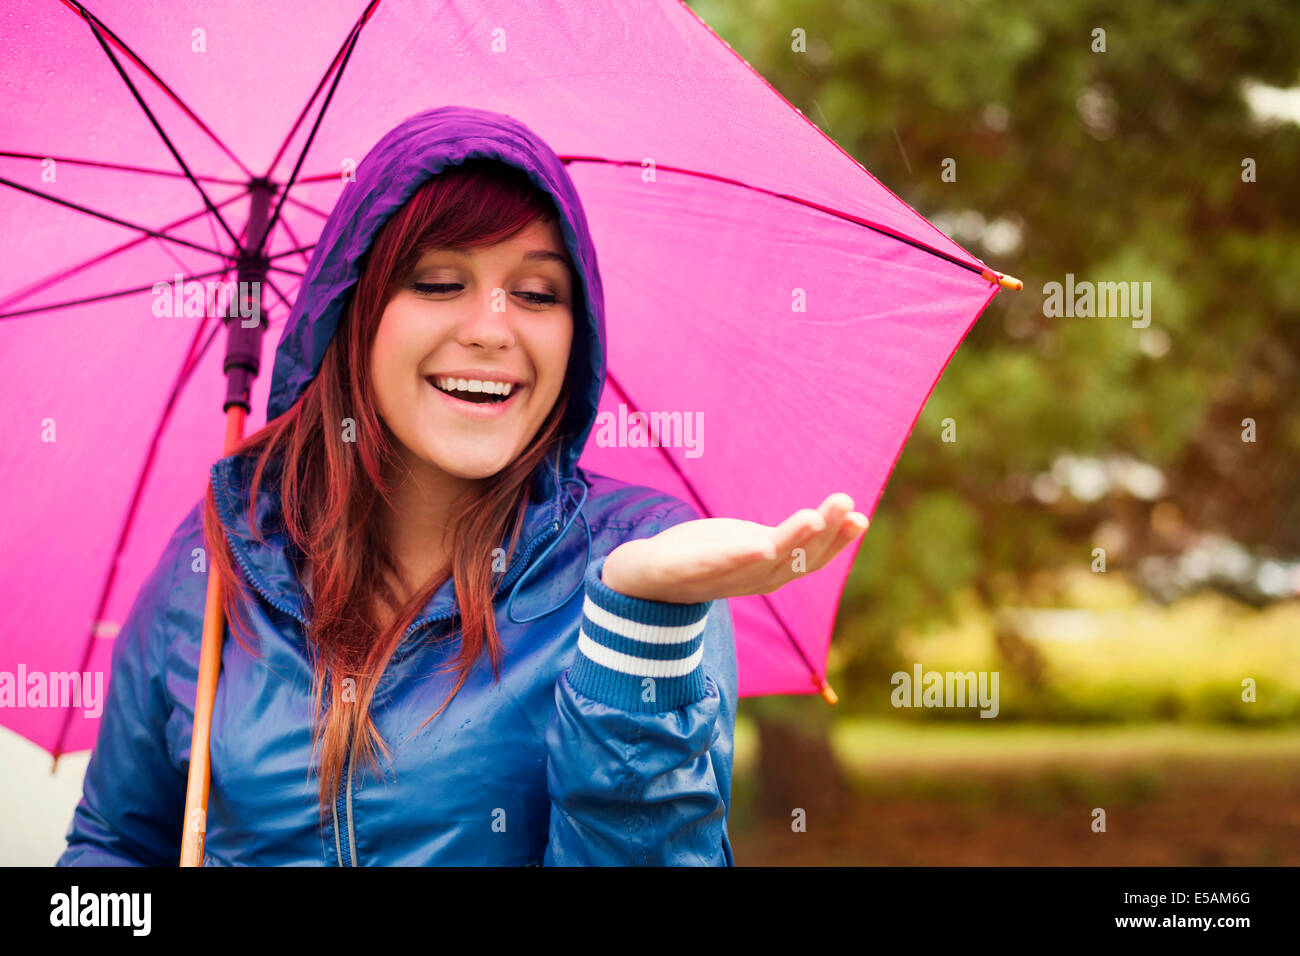 Cheerful woman under pink umbrella checking for rain, Debica, Poland Stock Photo